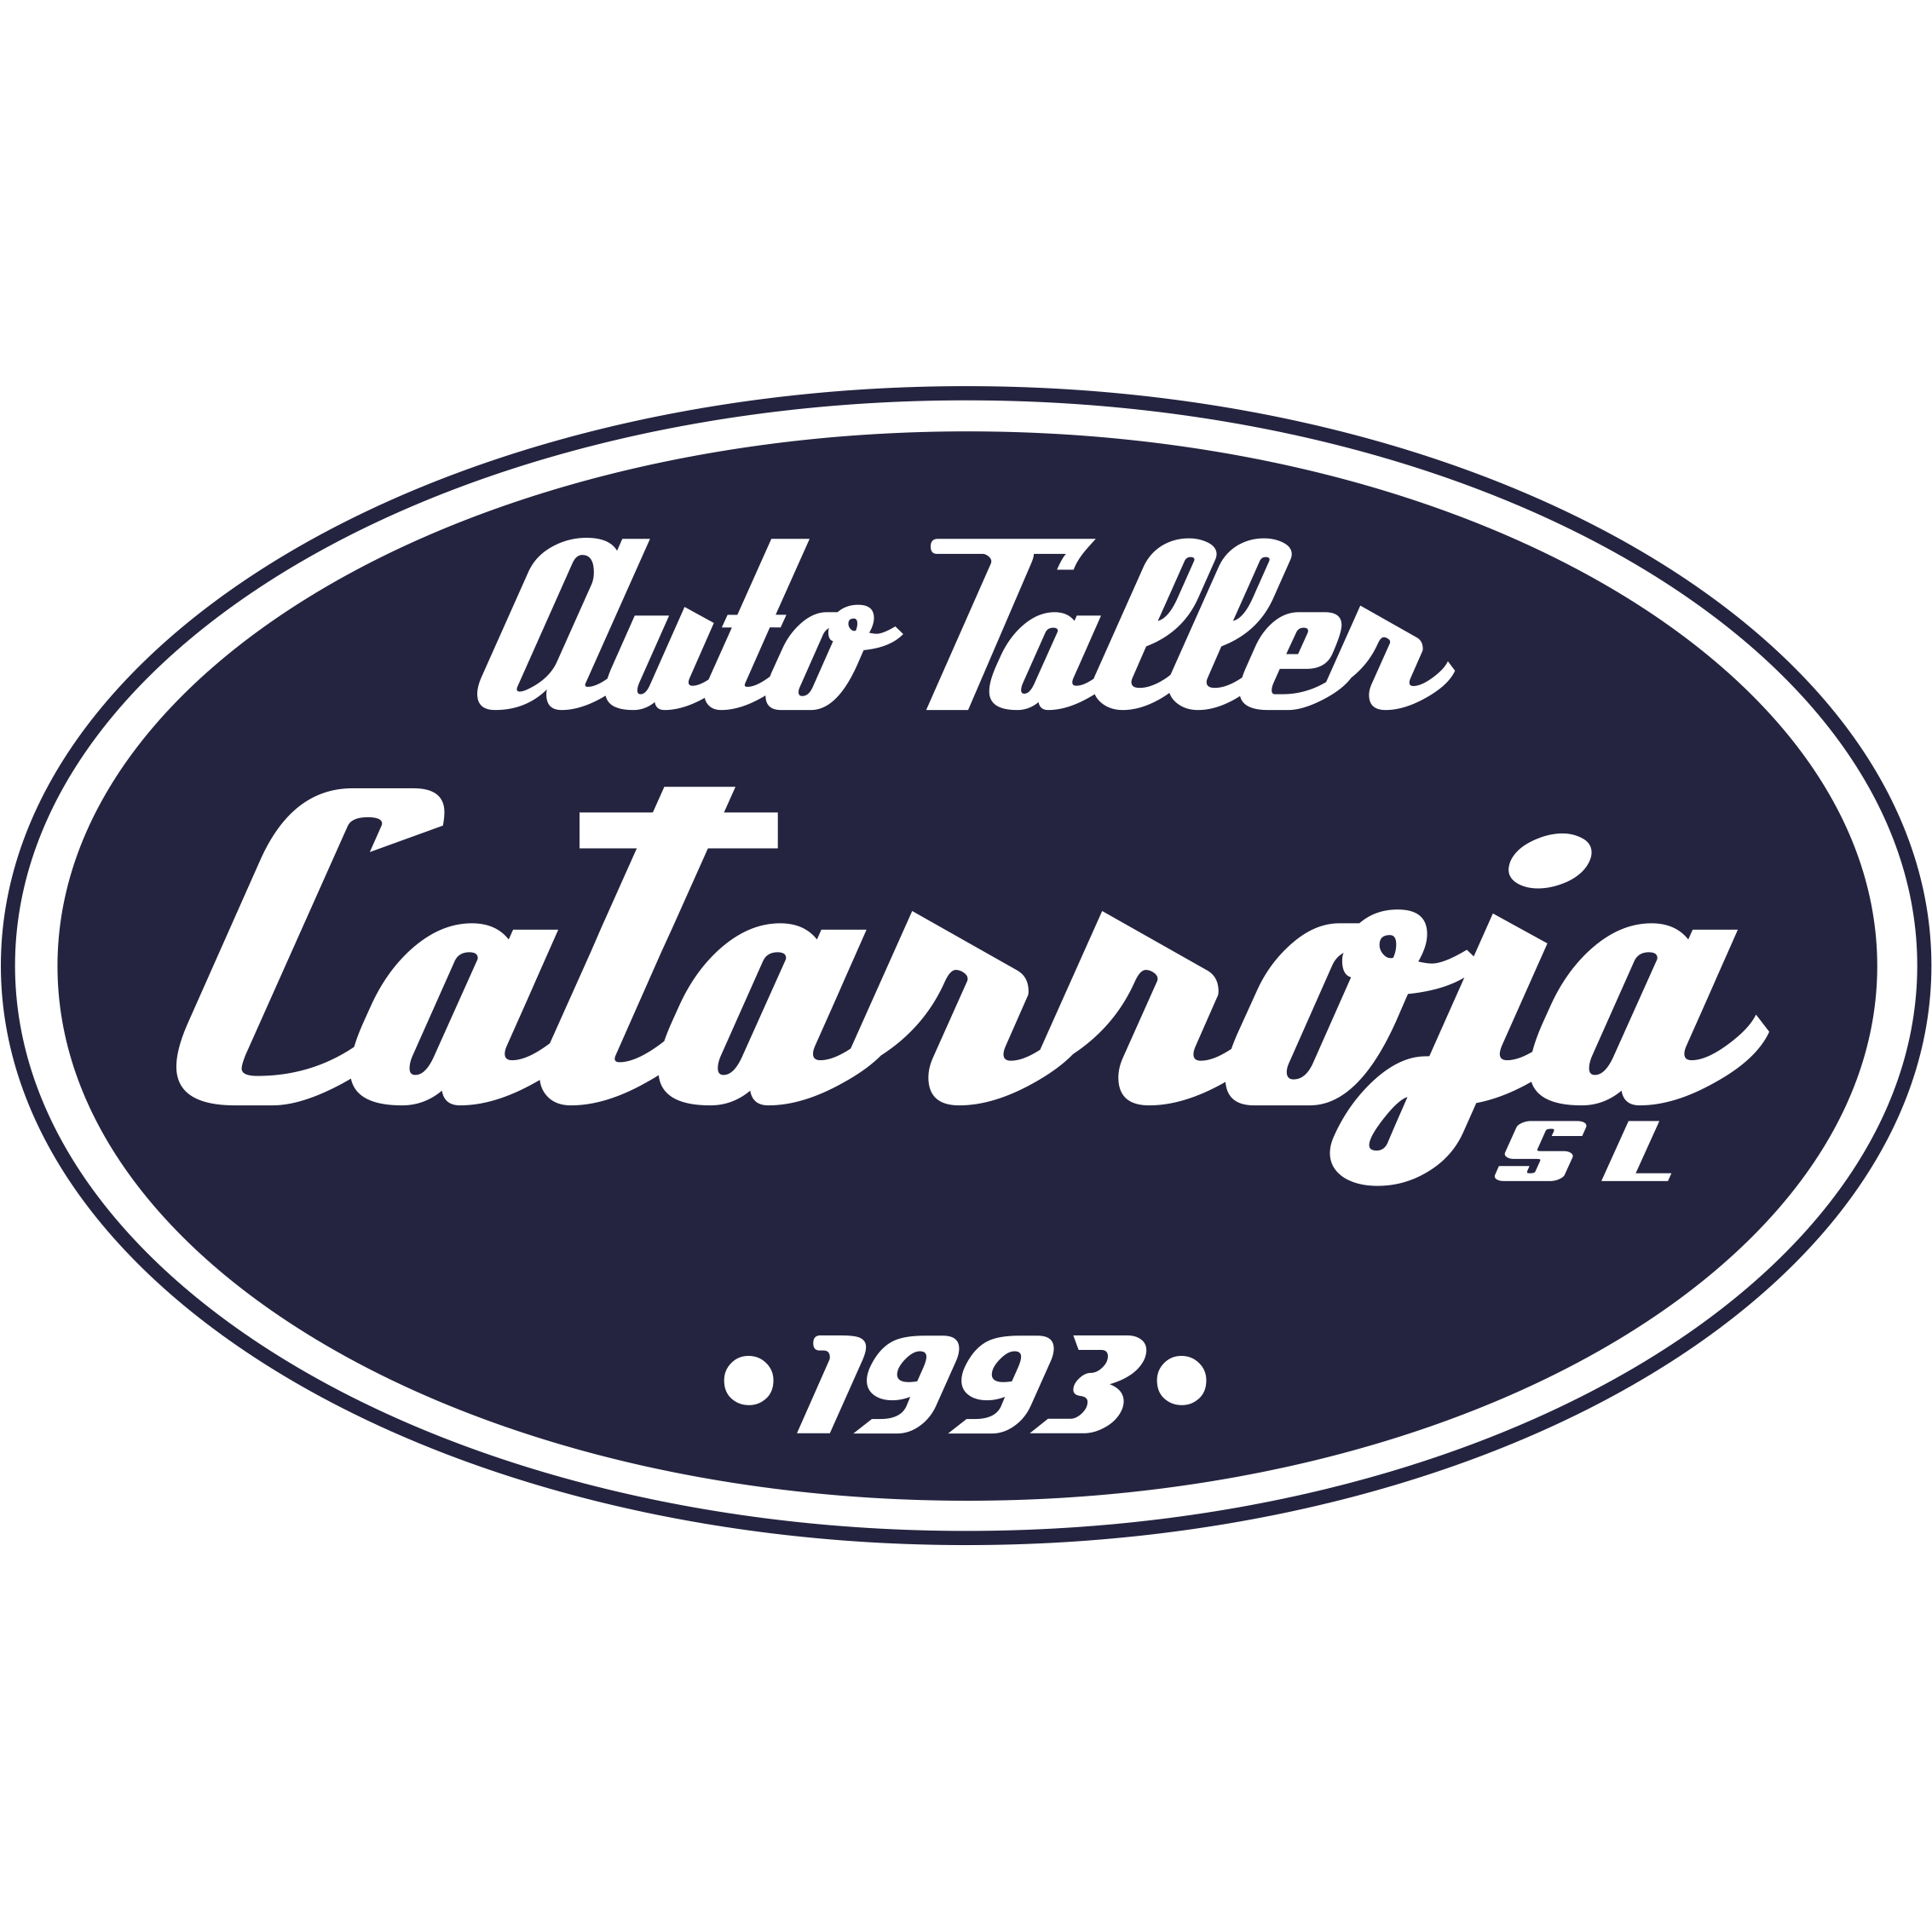 Auto Taller Catarroja, S.L. - Taller Mecánico en Catarroja Logo